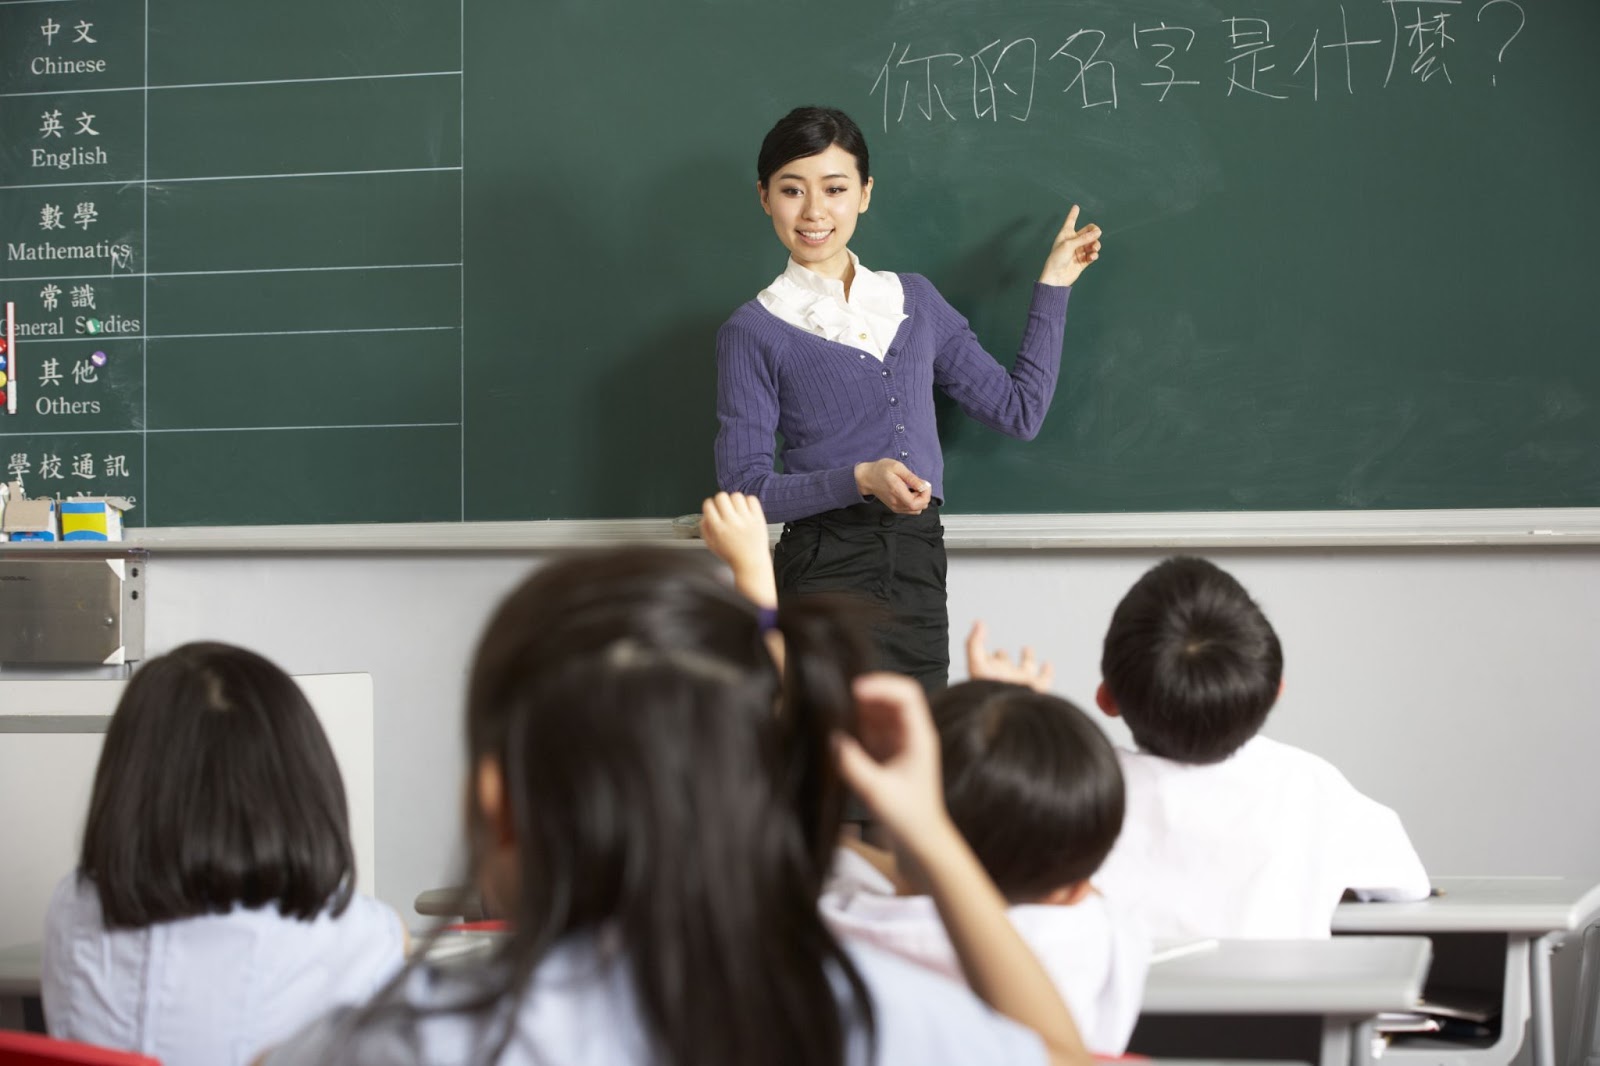 teacher standing beside the blackboard teaching students Chinese.